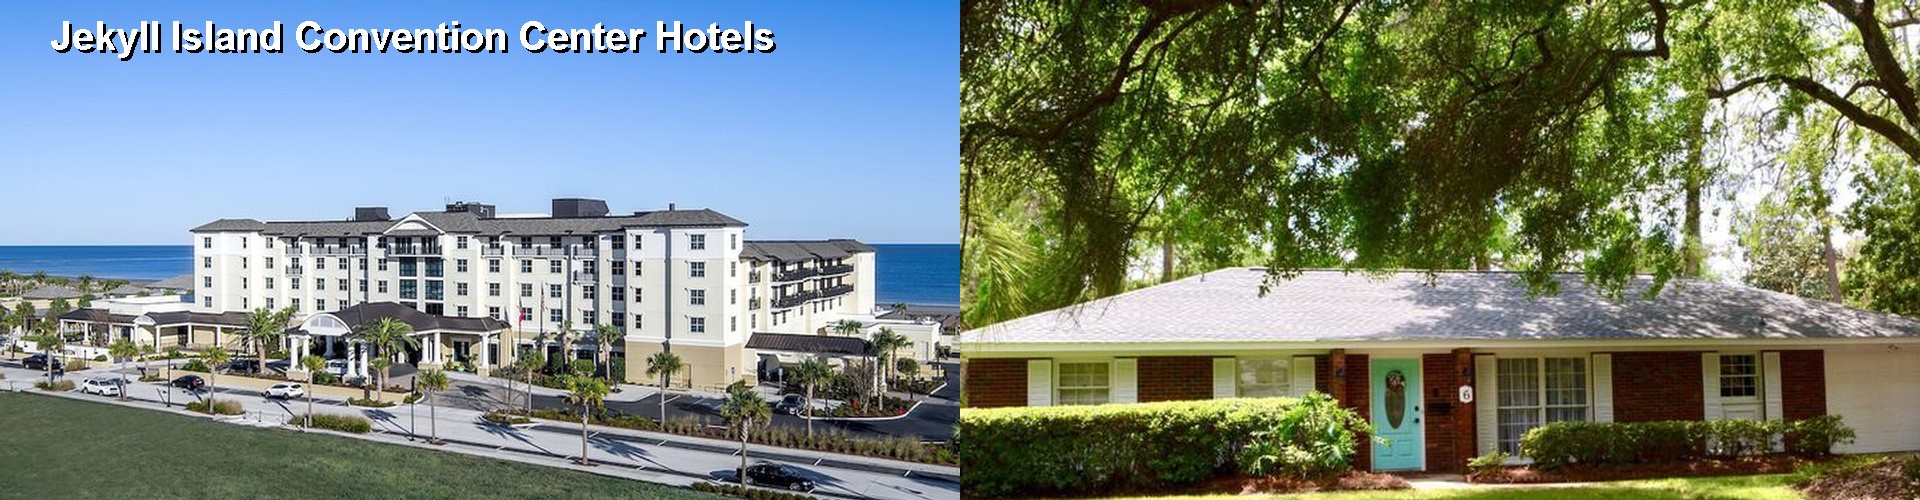 5 Best Hotels near Jekyll Island Convention Center